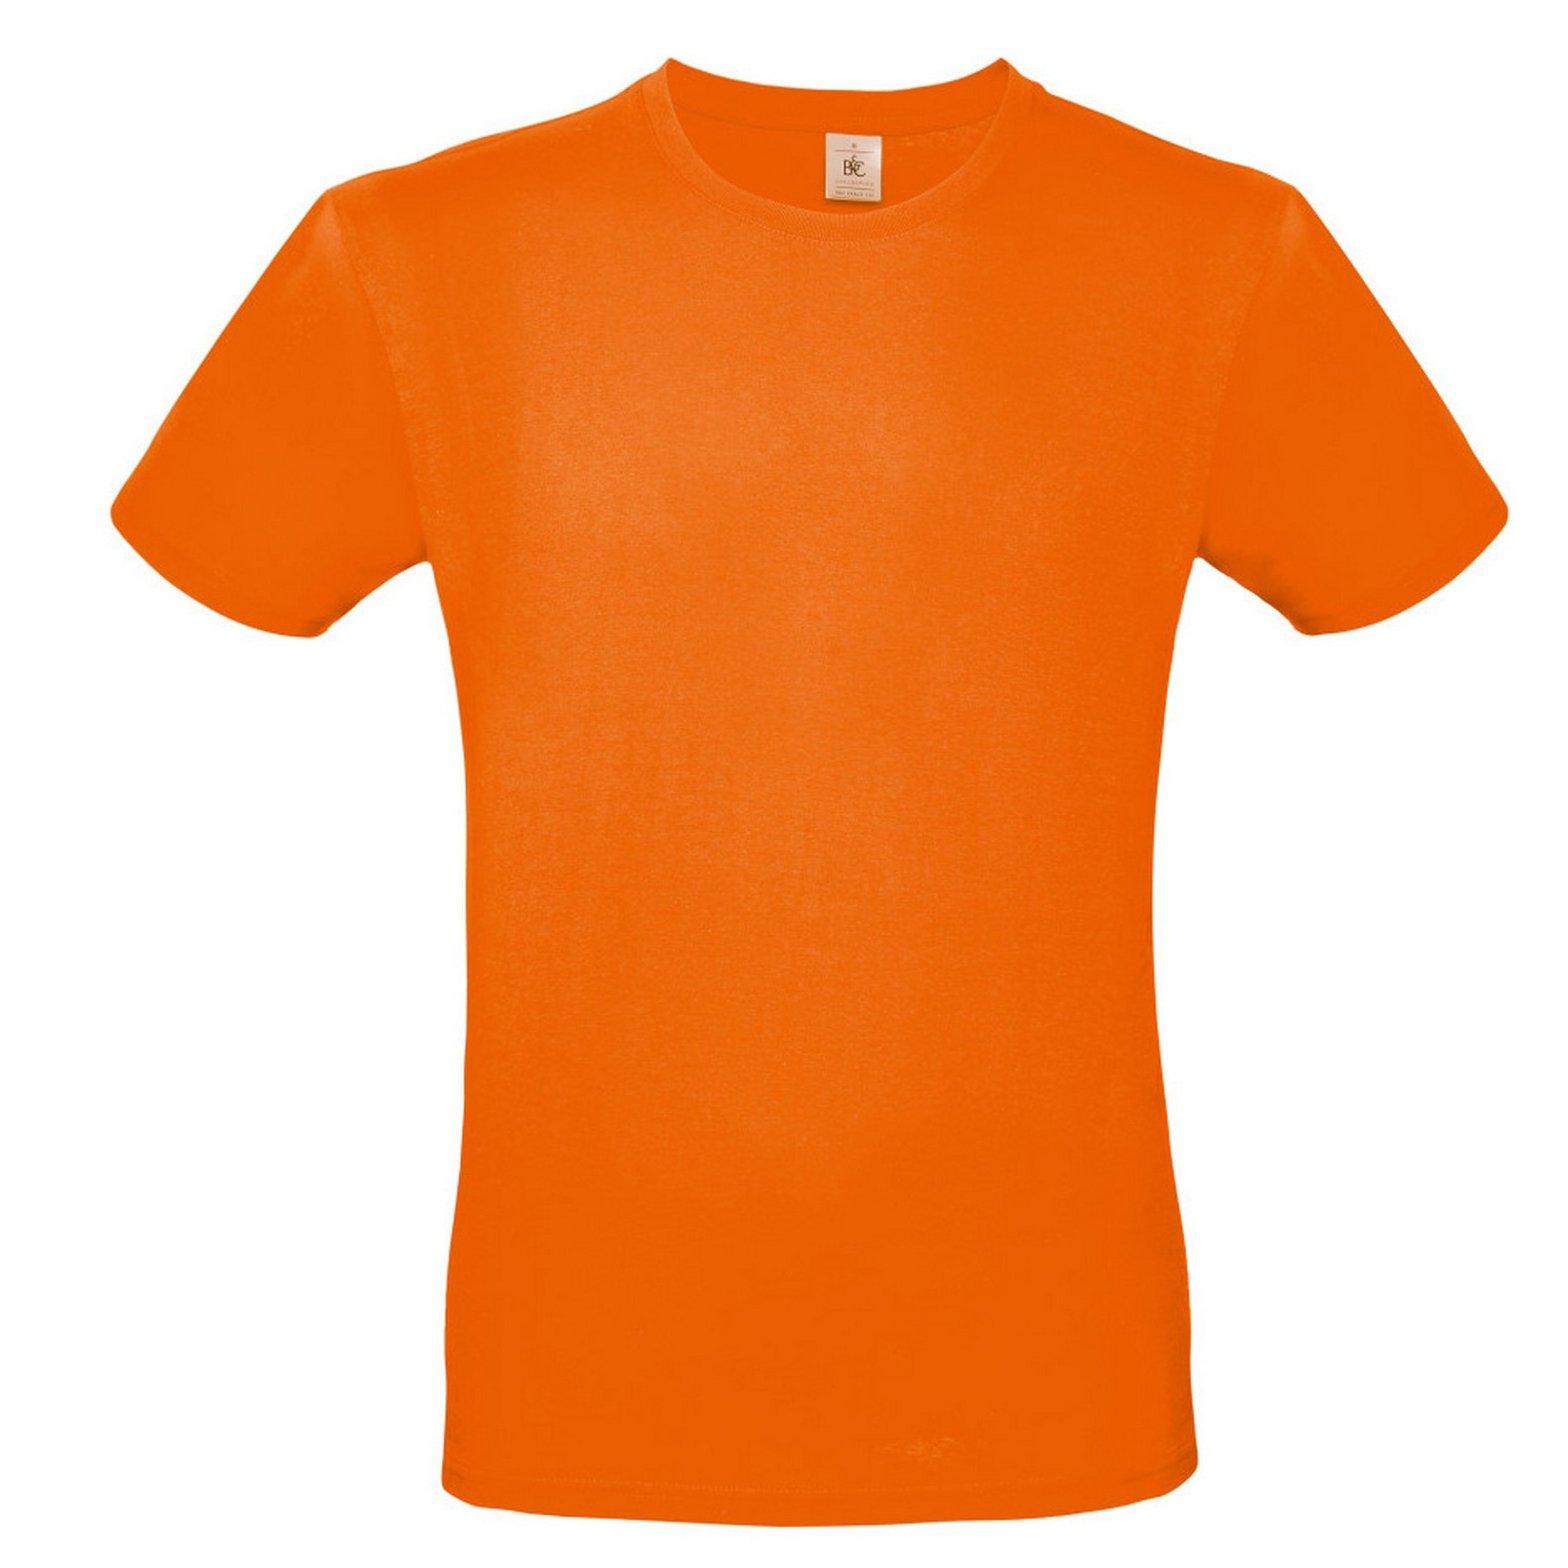 B&c Tshirt #e150 Herren Orange XS von B and C